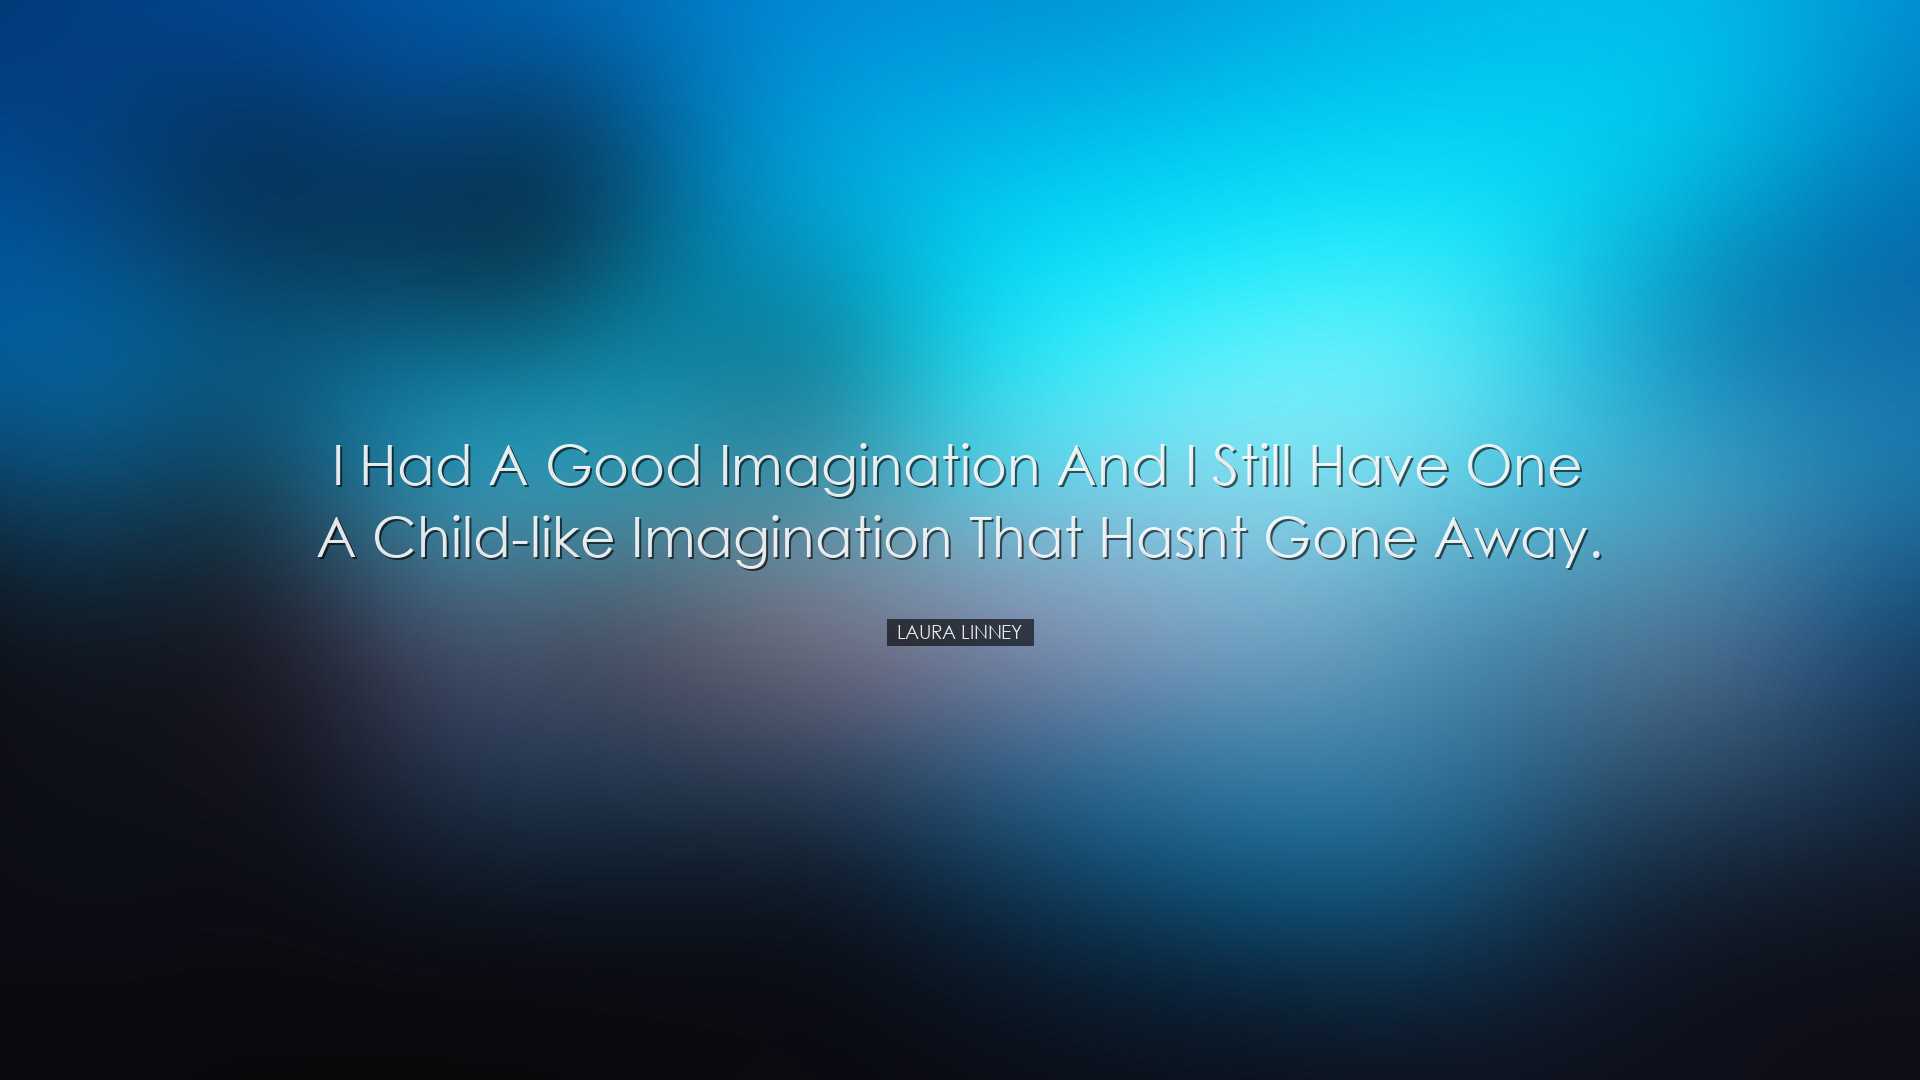 I had a good imagination and I still have one a child-like imagina